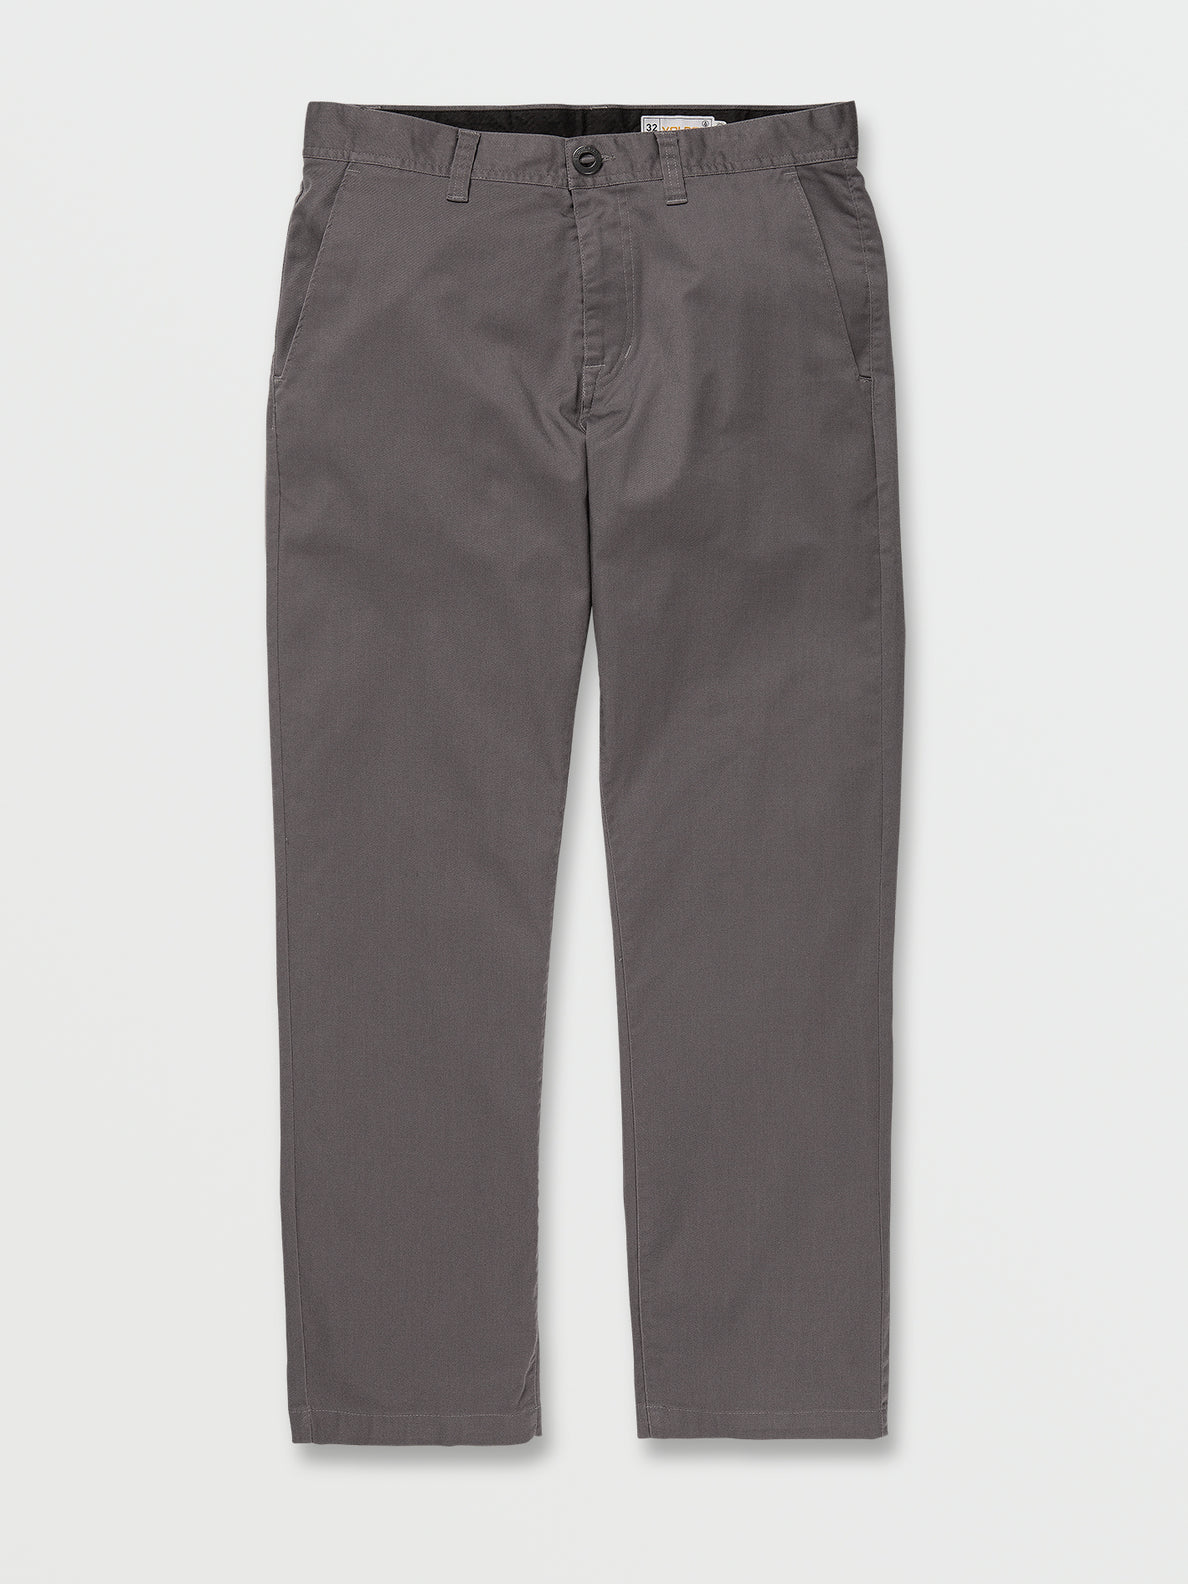 Frickin Regular Stretch Pants - Dusk Grey (A1112304_DSK) [F]